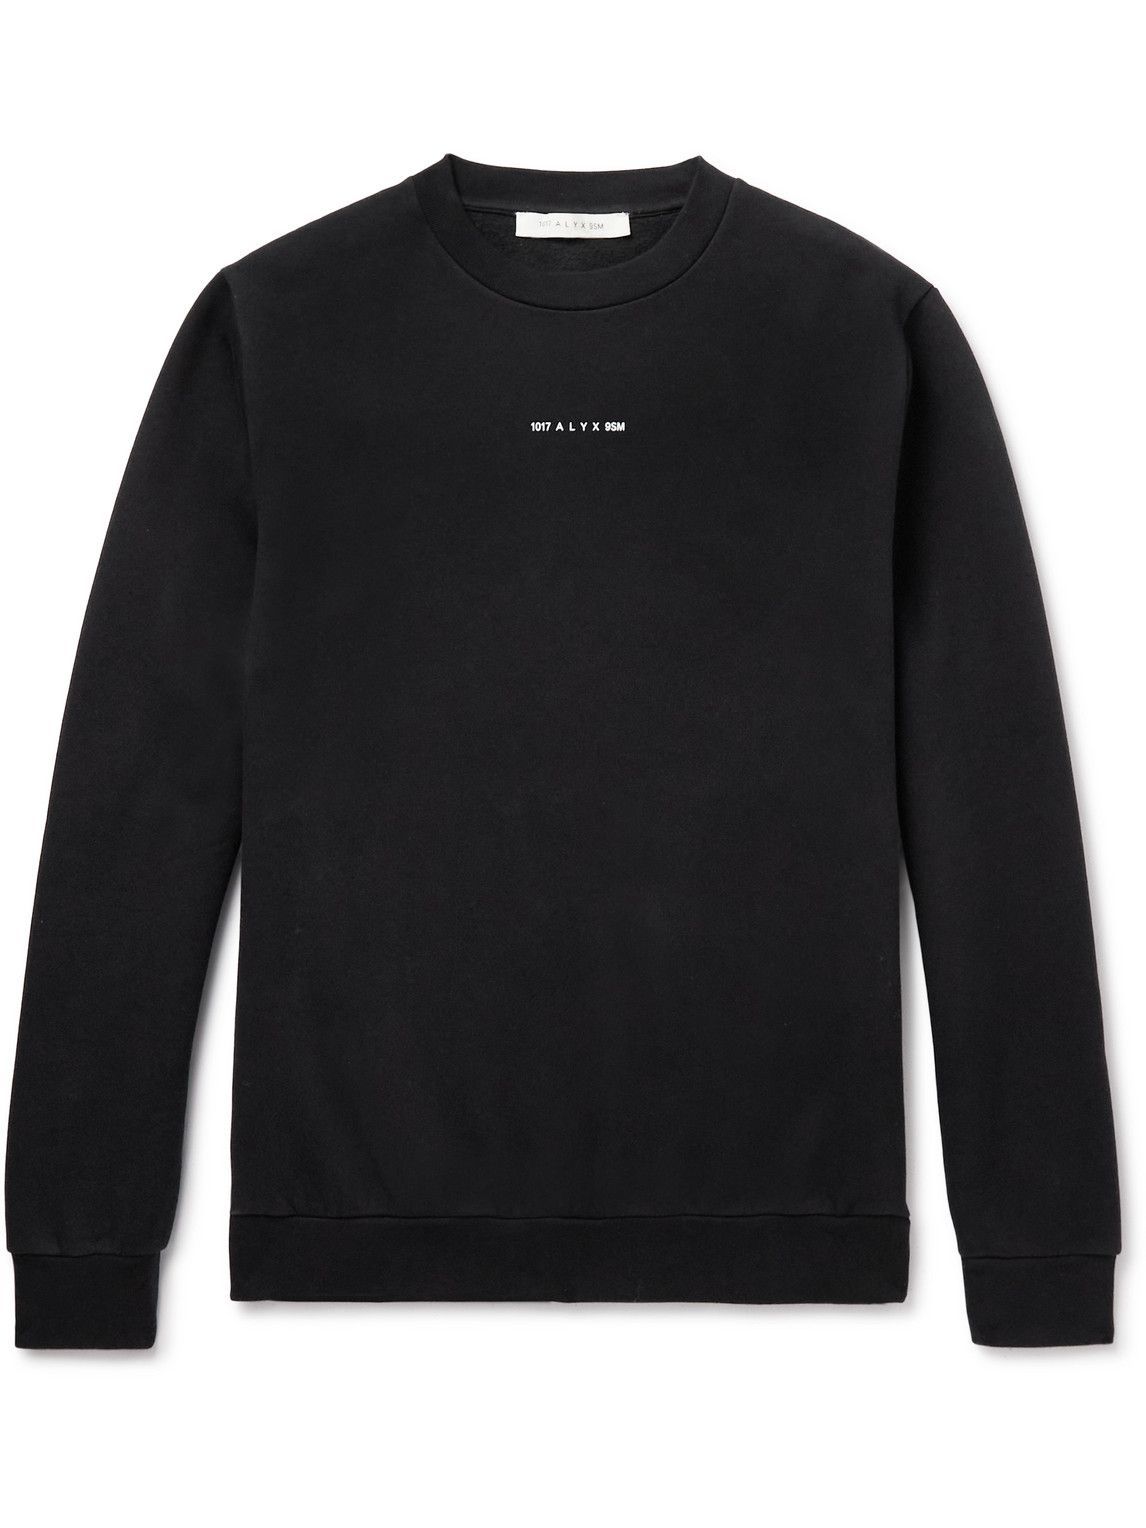 1017 ALYX 9SM - Logo-Print Cotton-Jersey Sweatshirt - Black